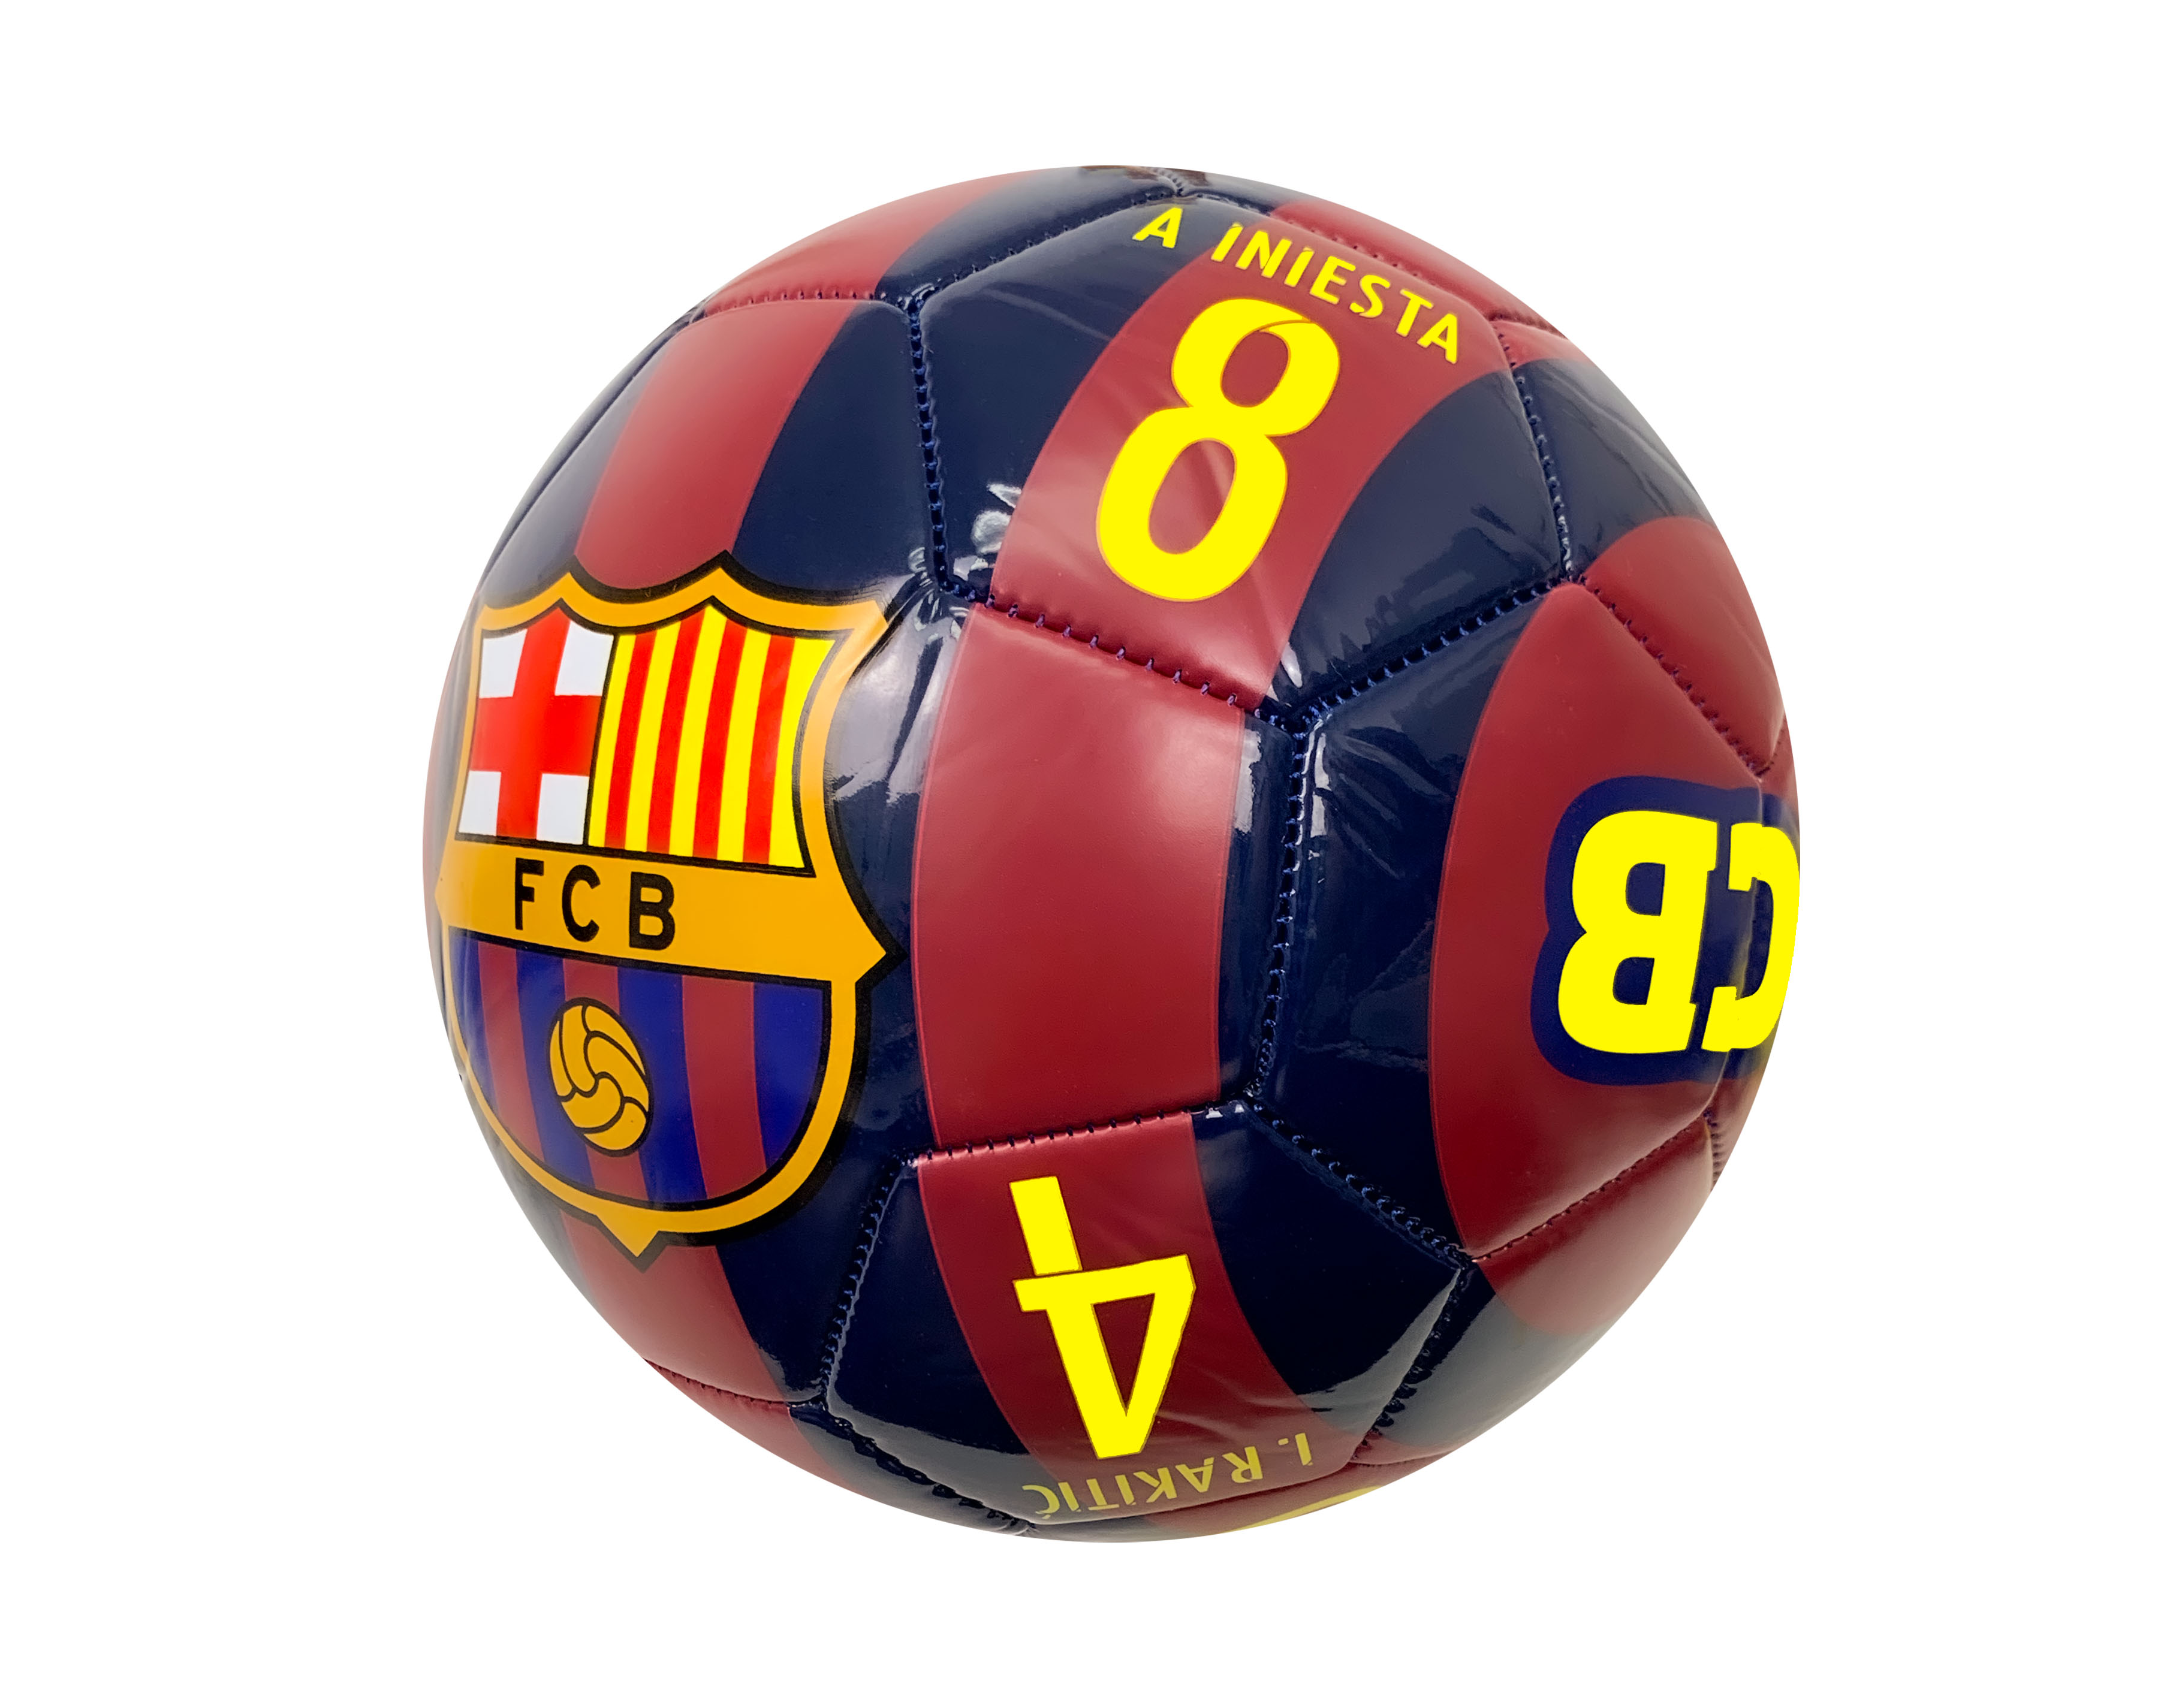 Barcelona Soccer ball (Size 5), FC Barcelona Players Ball Name & Number #5 - image 5 of 5